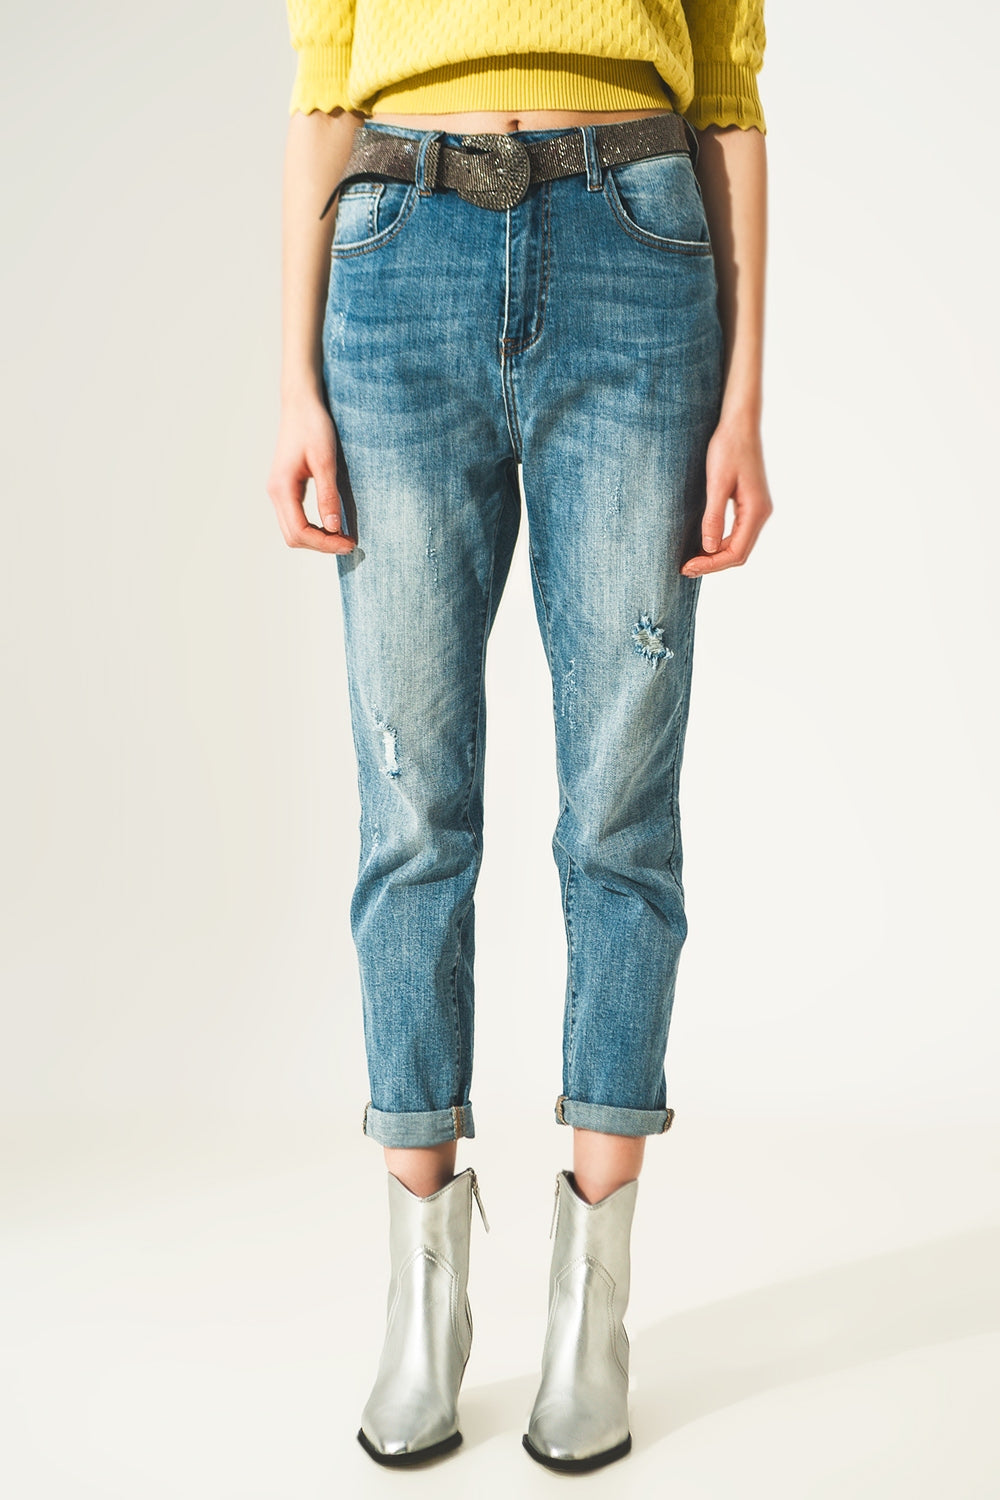 Q2 Distressed straight leg jean in light blue